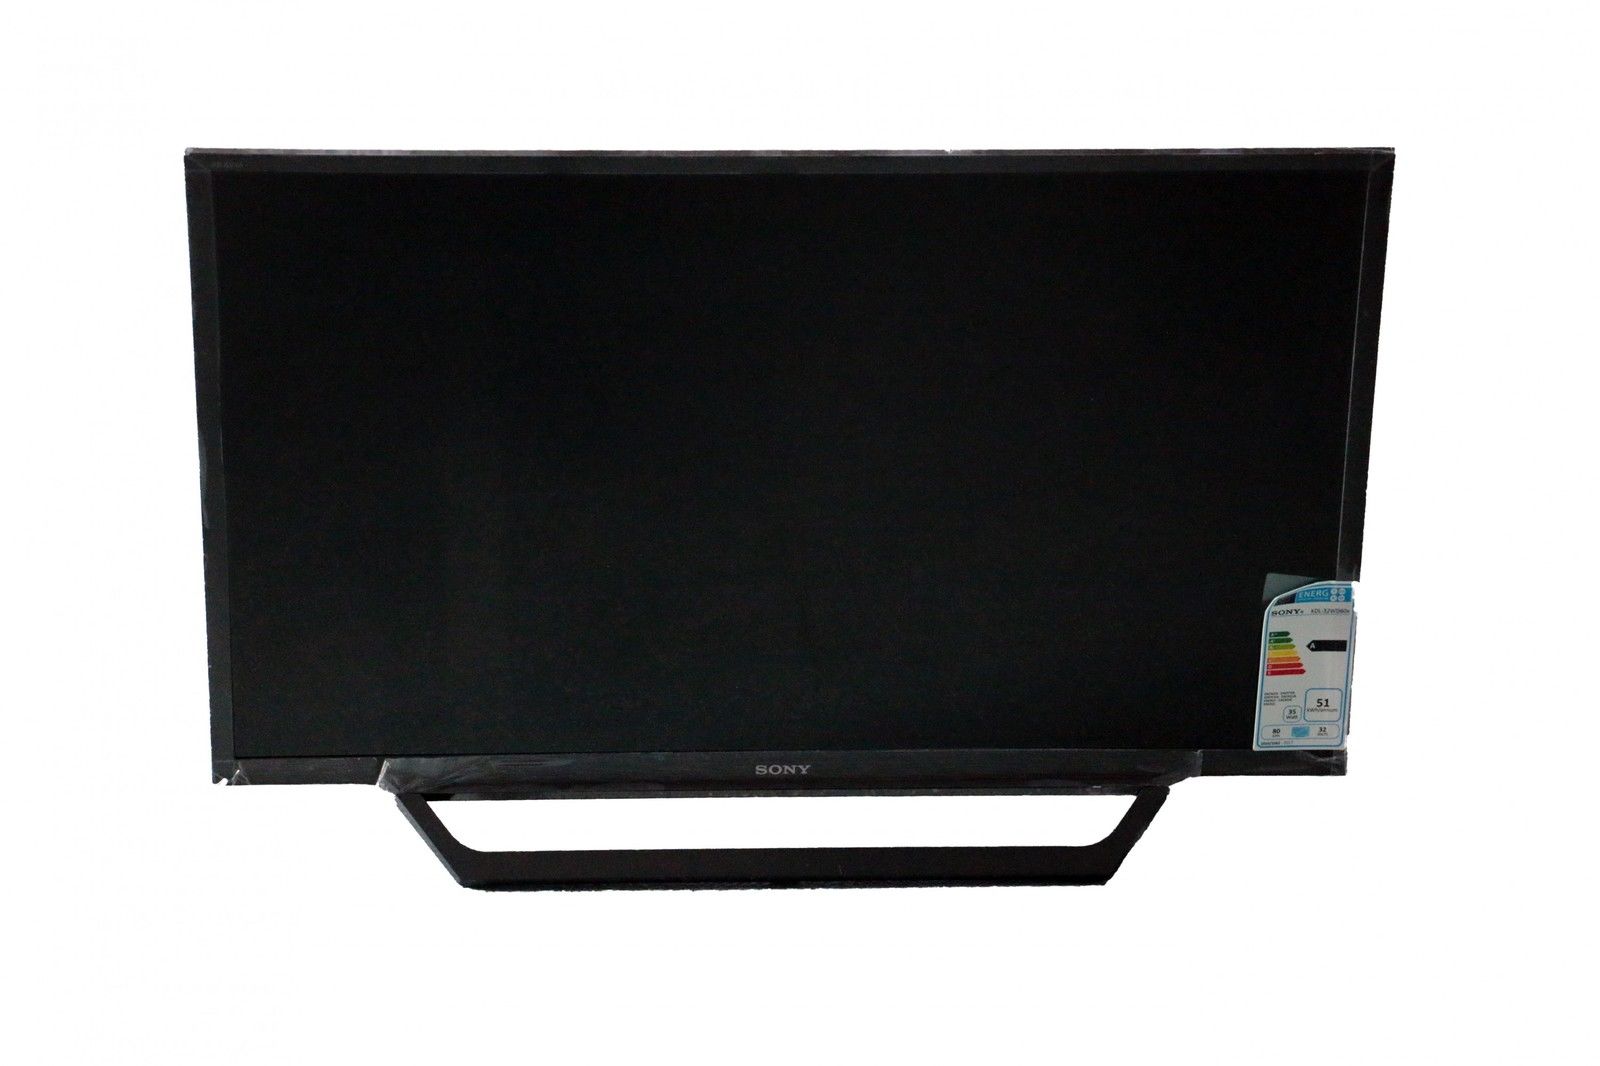 Sony KDL-32WD603B Smart-TV 32 Zoll HD-Ready DVB-T2, DVB-C schwarz